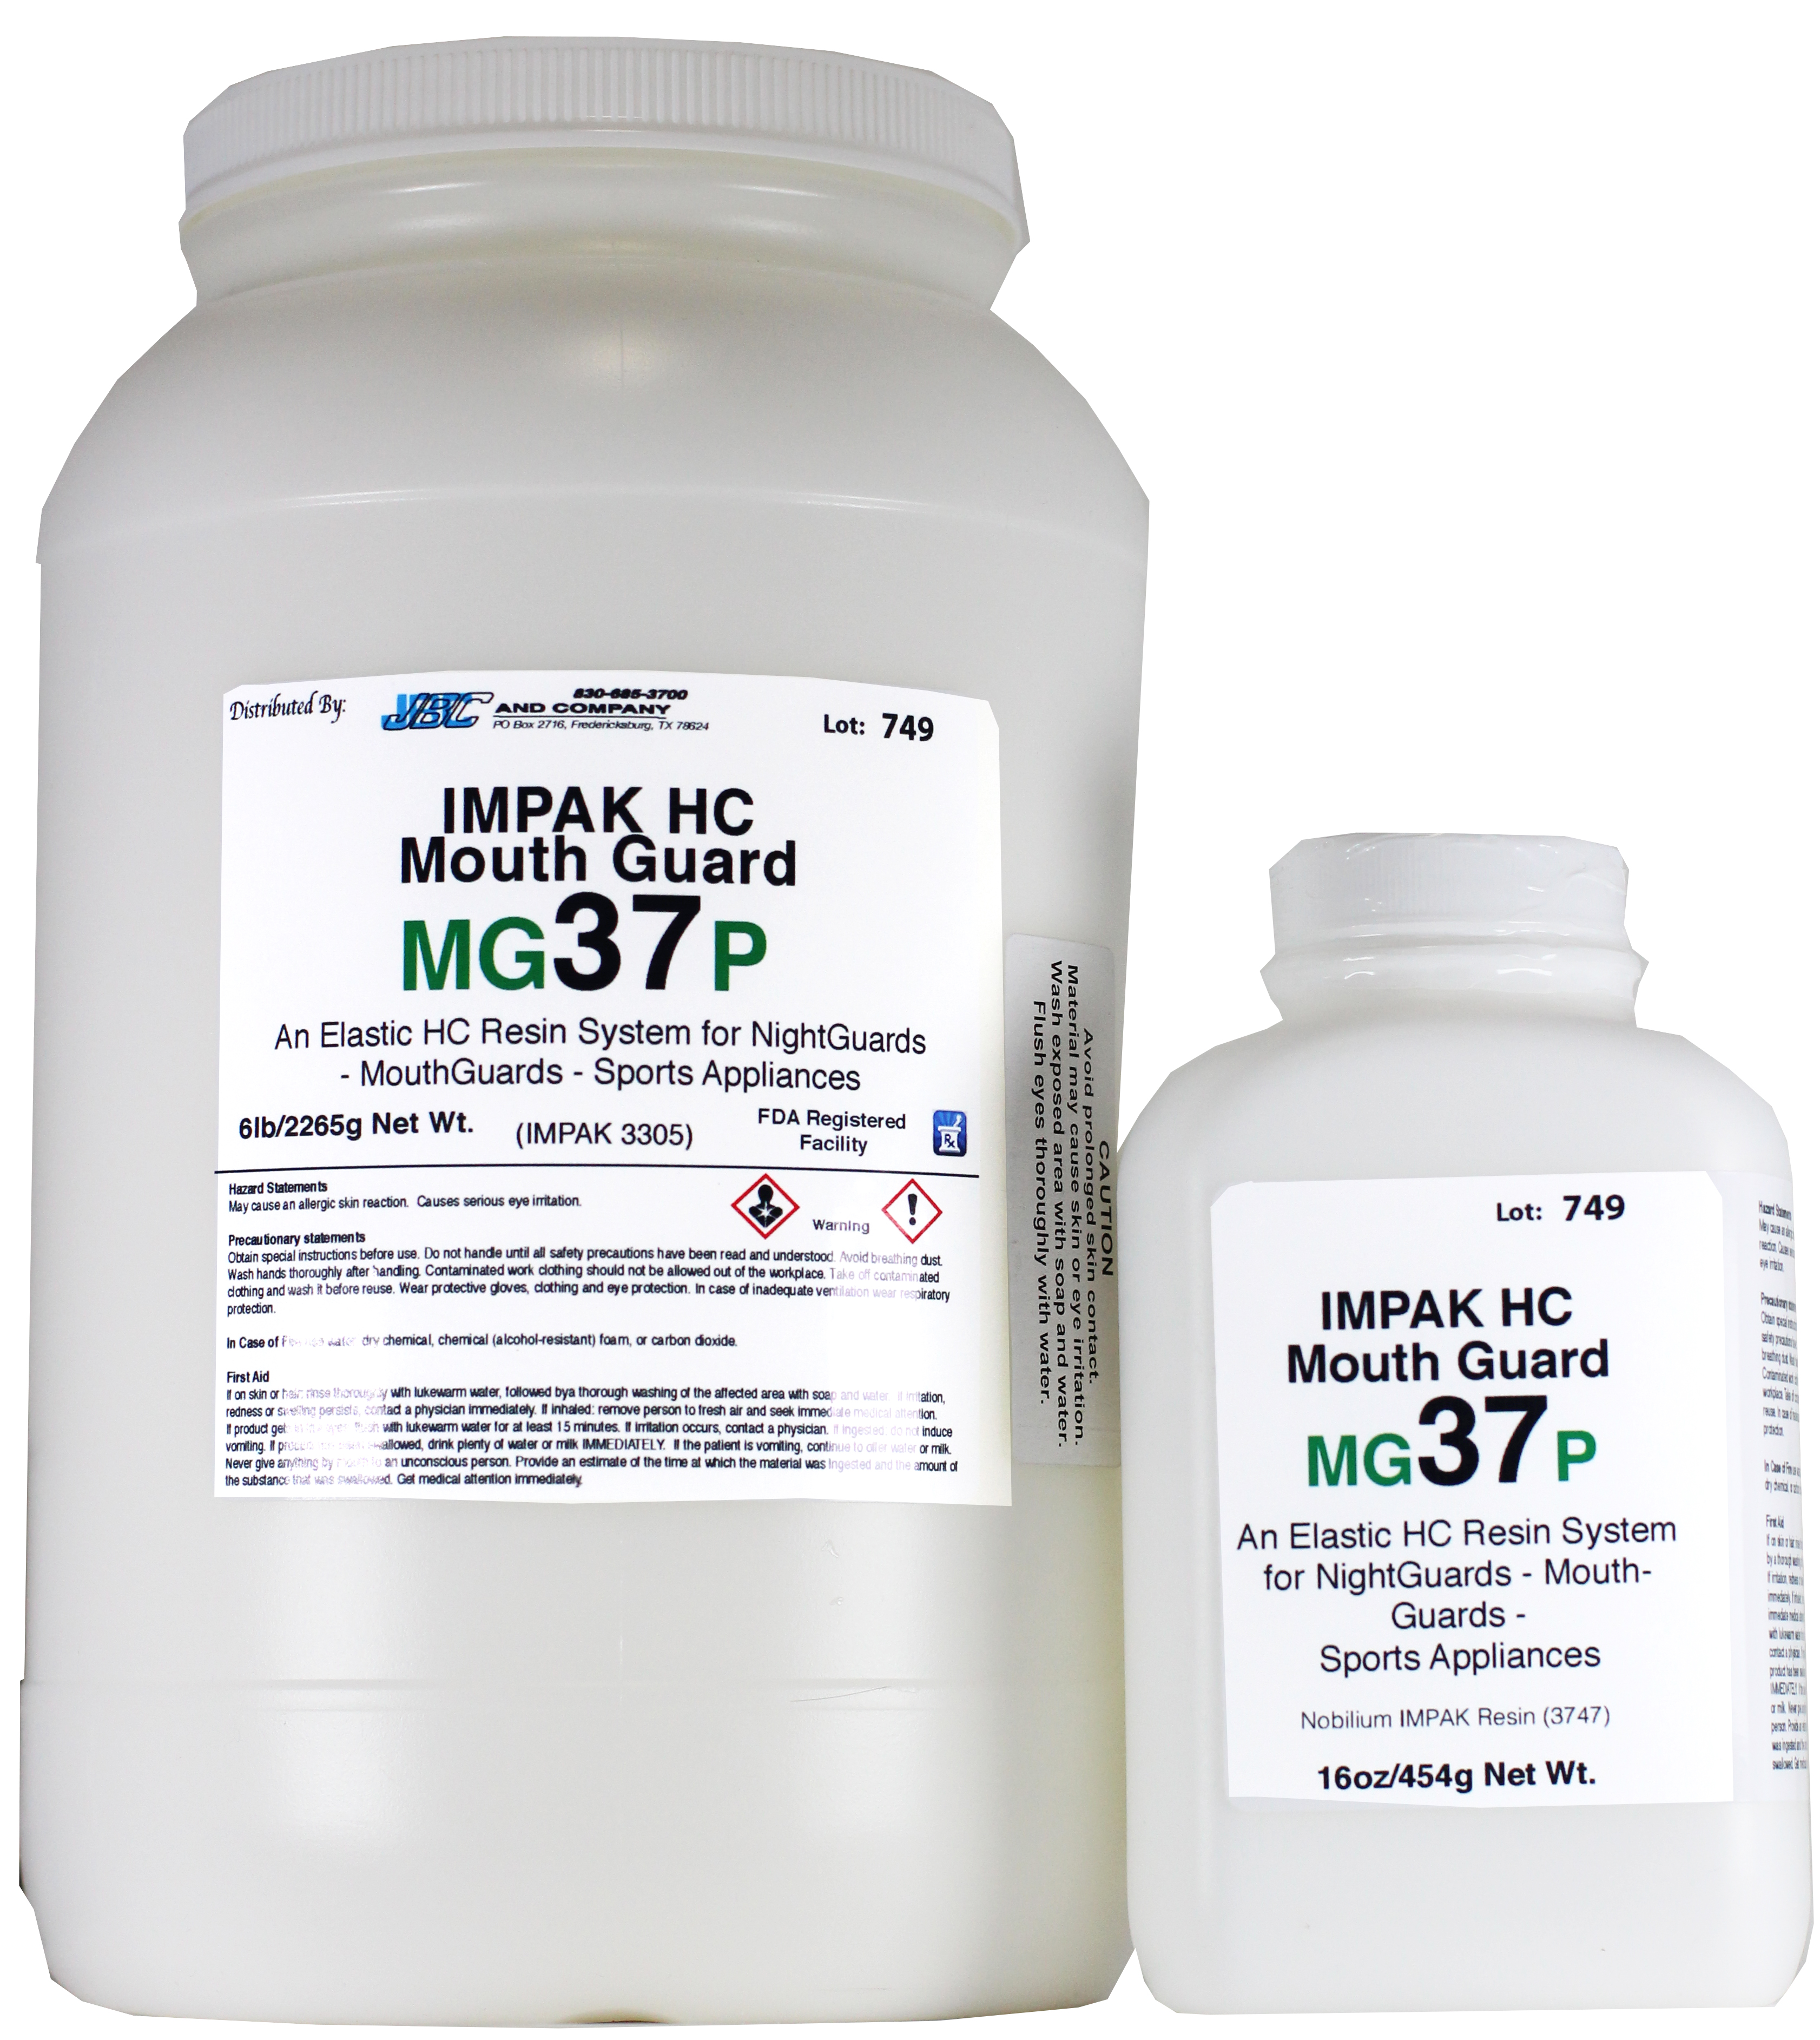 Nobilium IMPAK HC Resin Powder